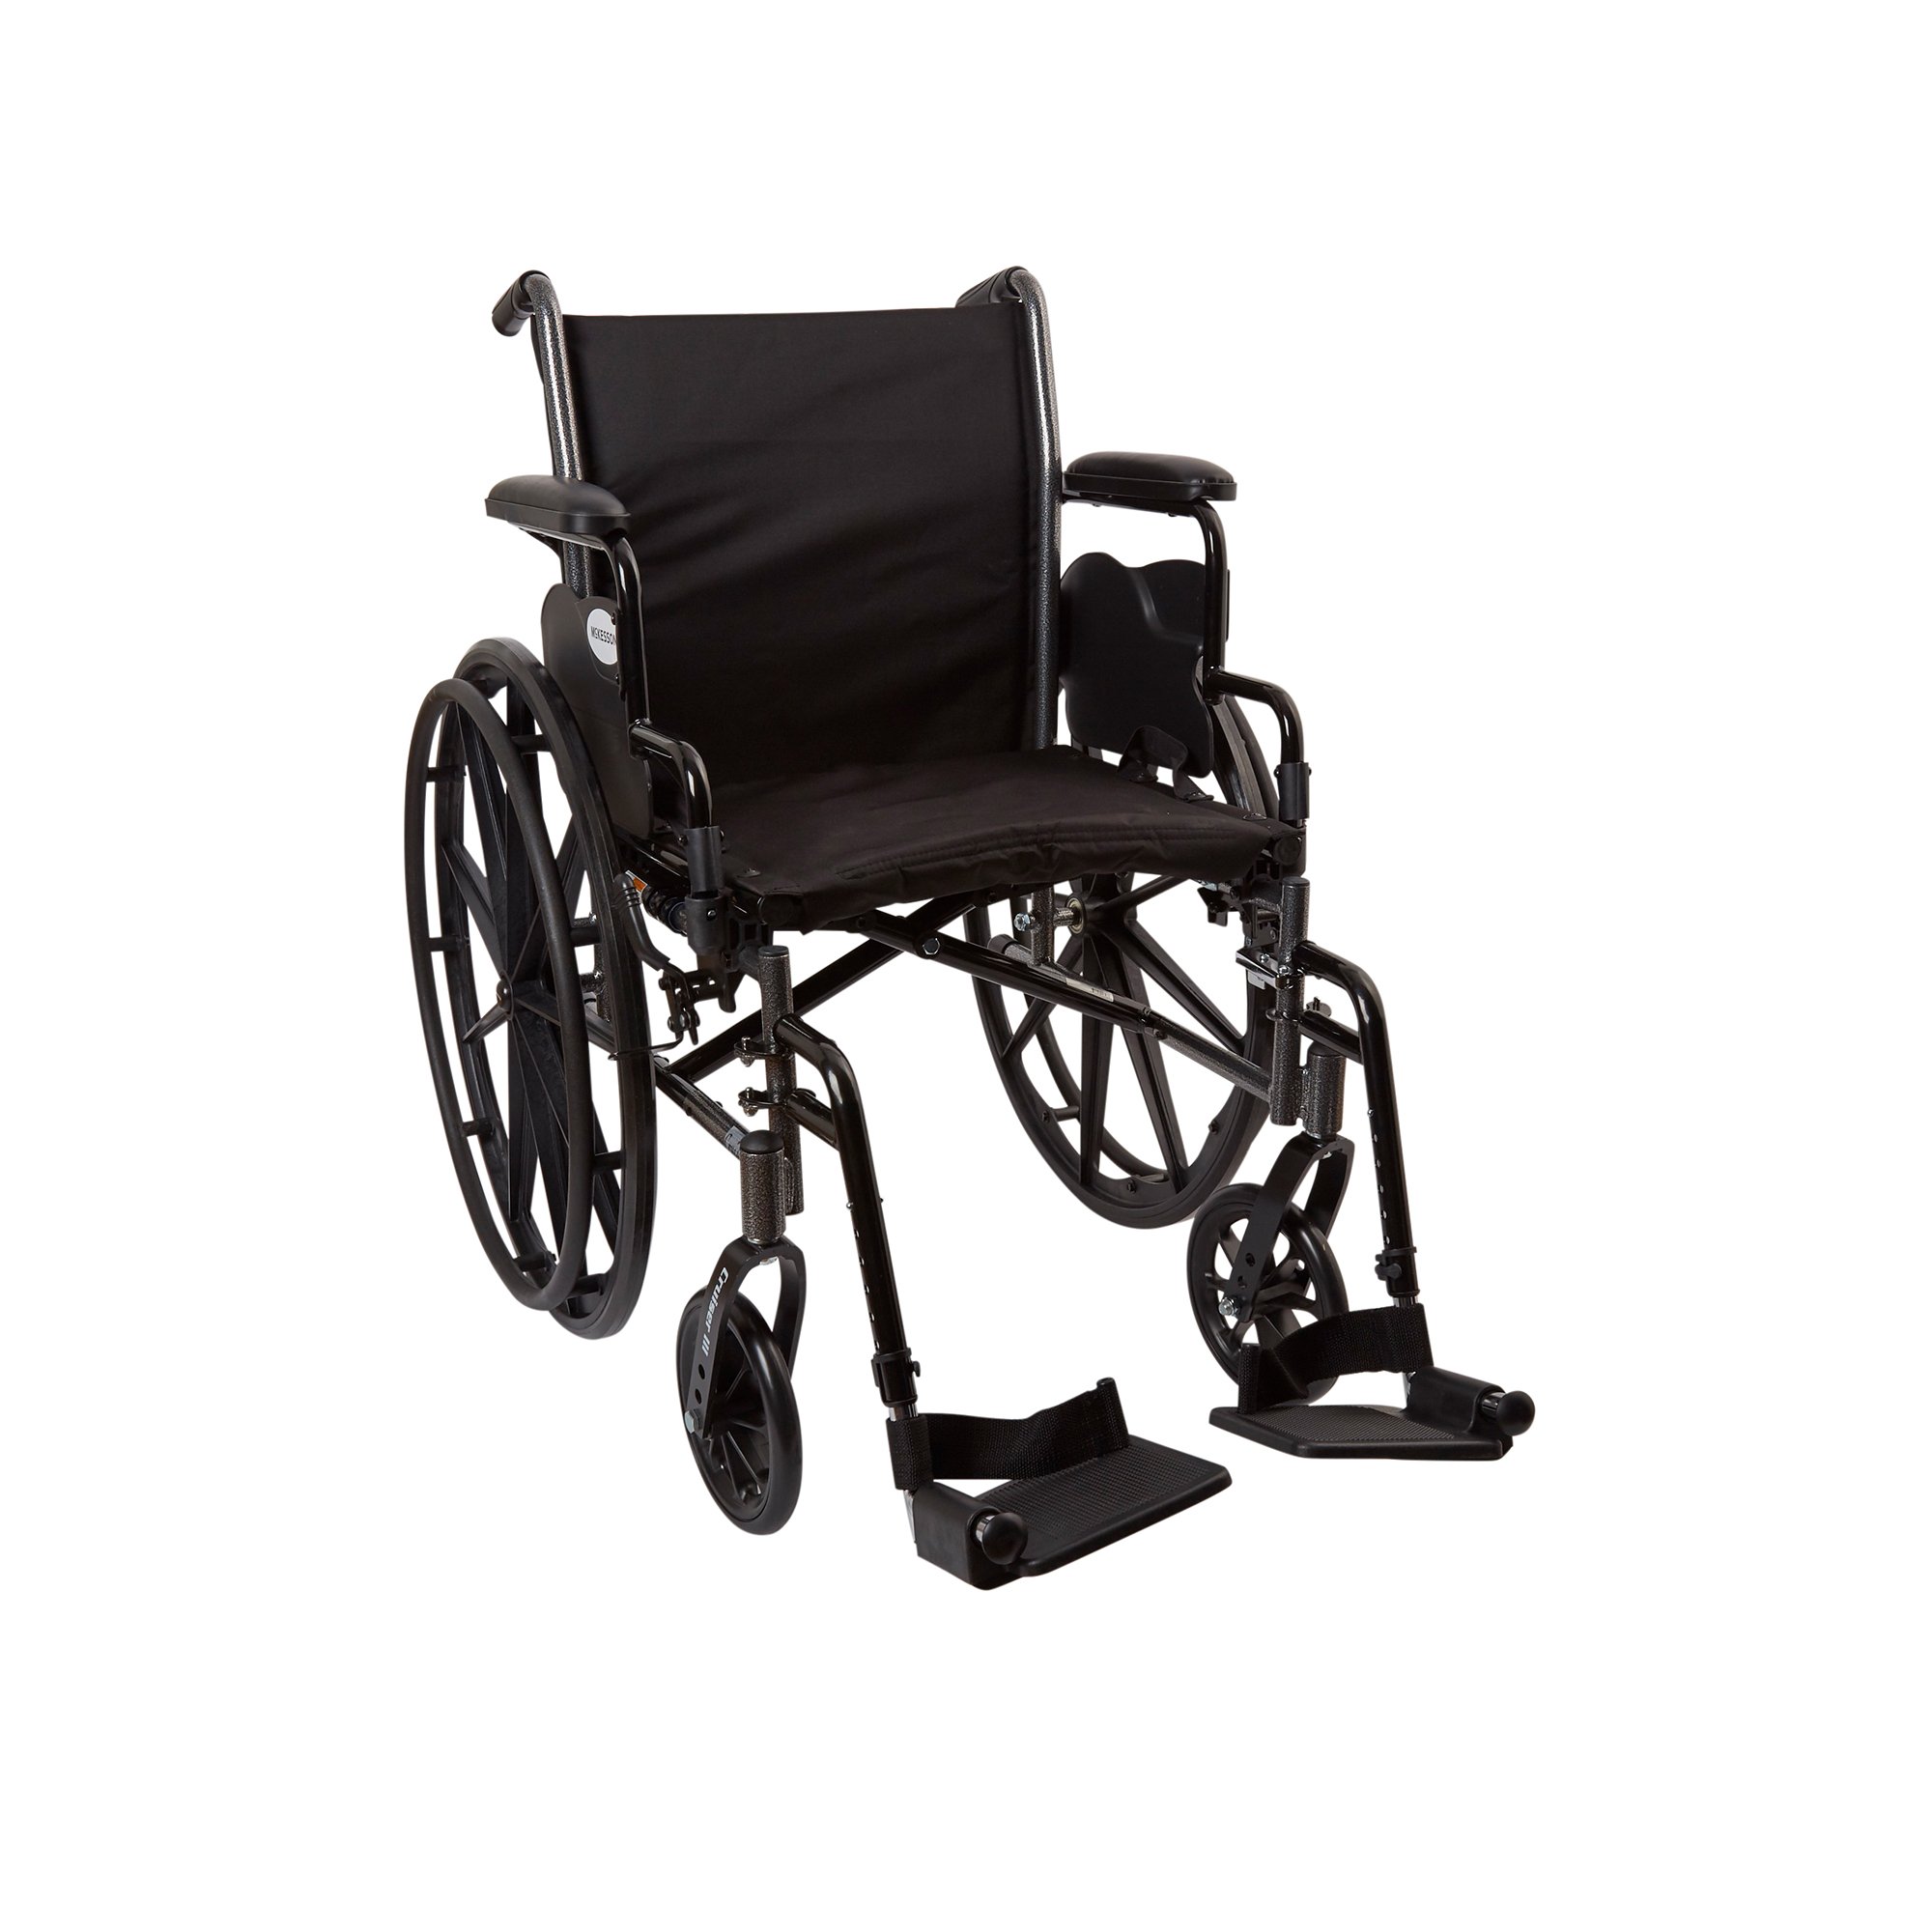 McKesson Lightweight Wheelchair, 18 Inch Seat Width, 300 lbs. Weight Capacity